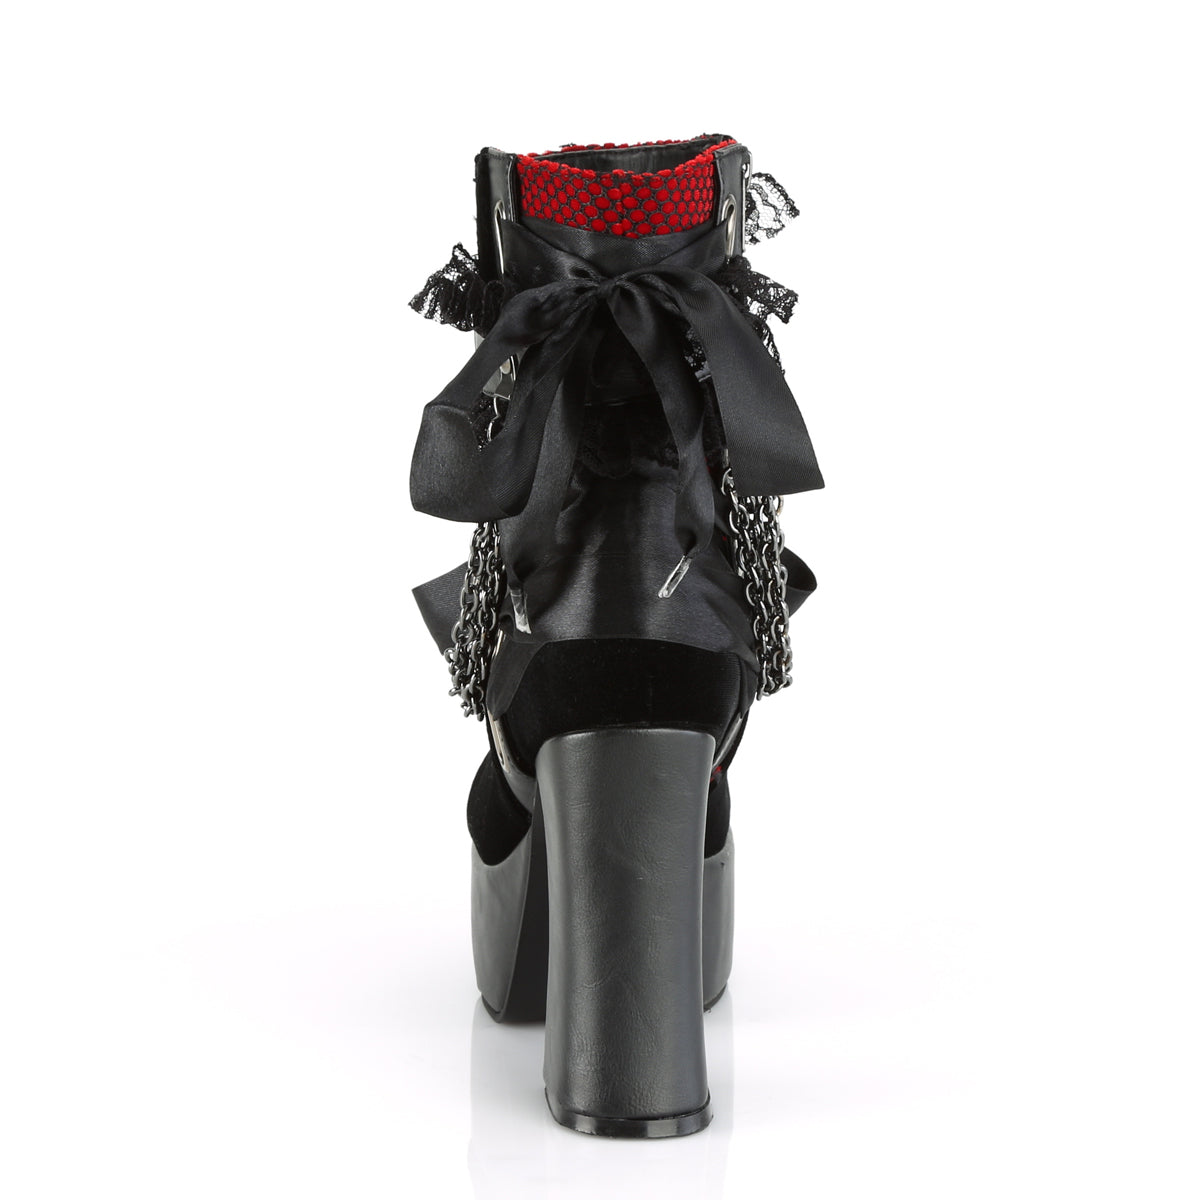 DemoniaCult Botas de tobillo para mujeres CHARADE-110 Blk V. Le-Red-Blk Velvet-Fishnet Superposición